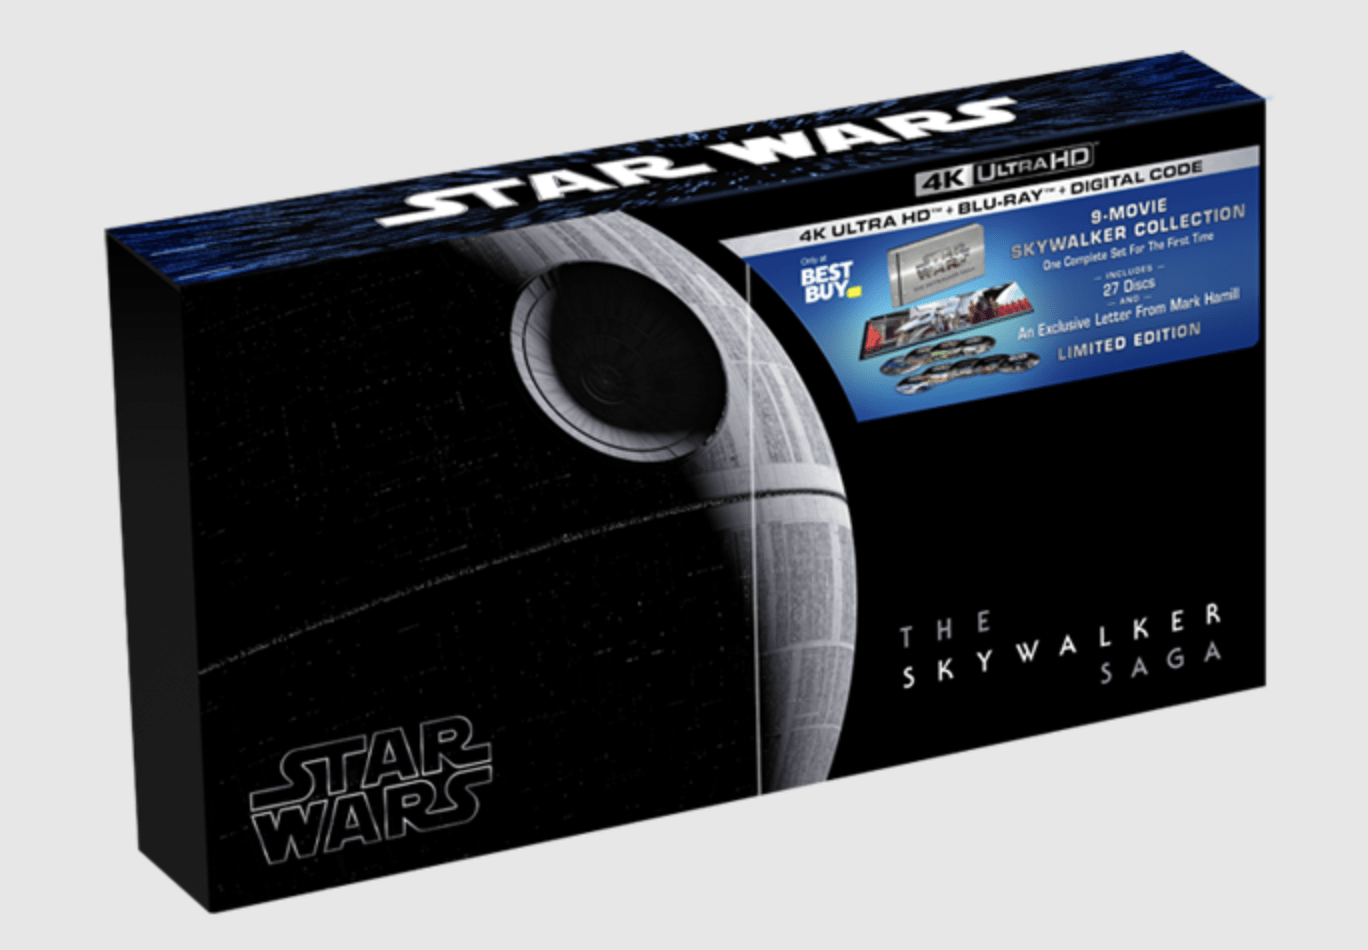 Star Wars Skywalker Saga Box Set